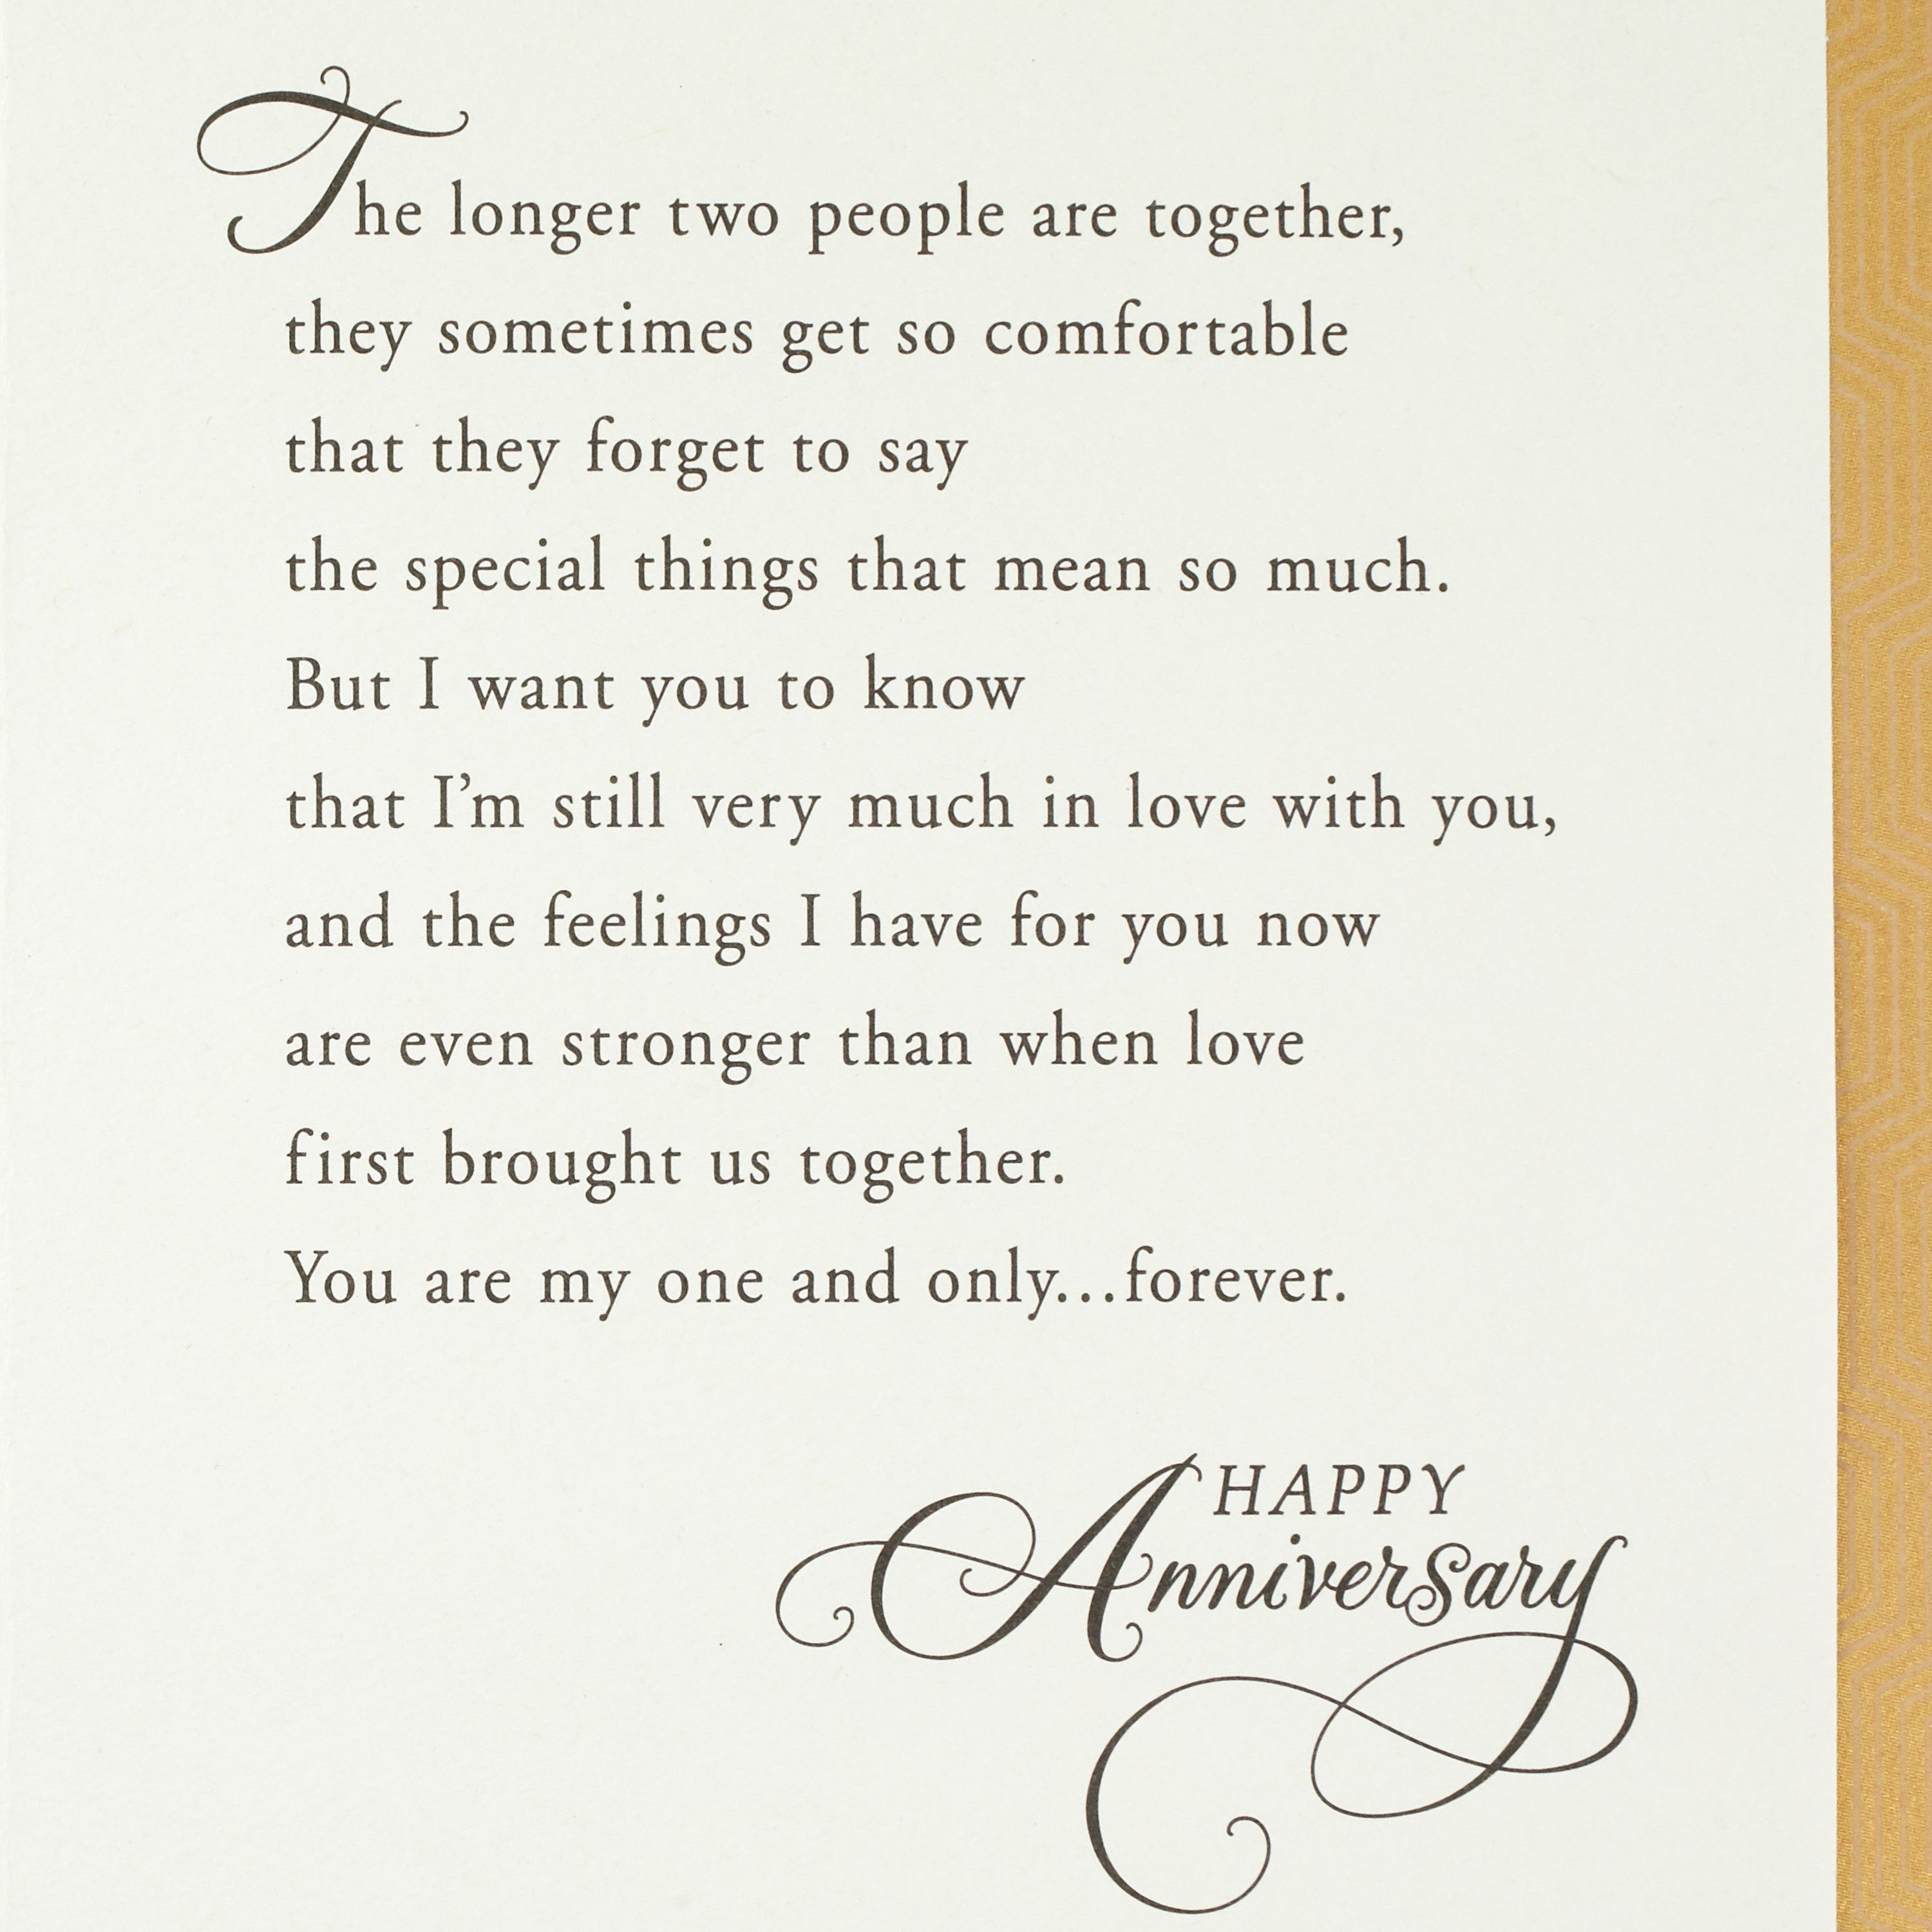 Hallmark Anniversary Card for Husband, Wife, Boyfriend, Girlfriend (My Heart is Yours)